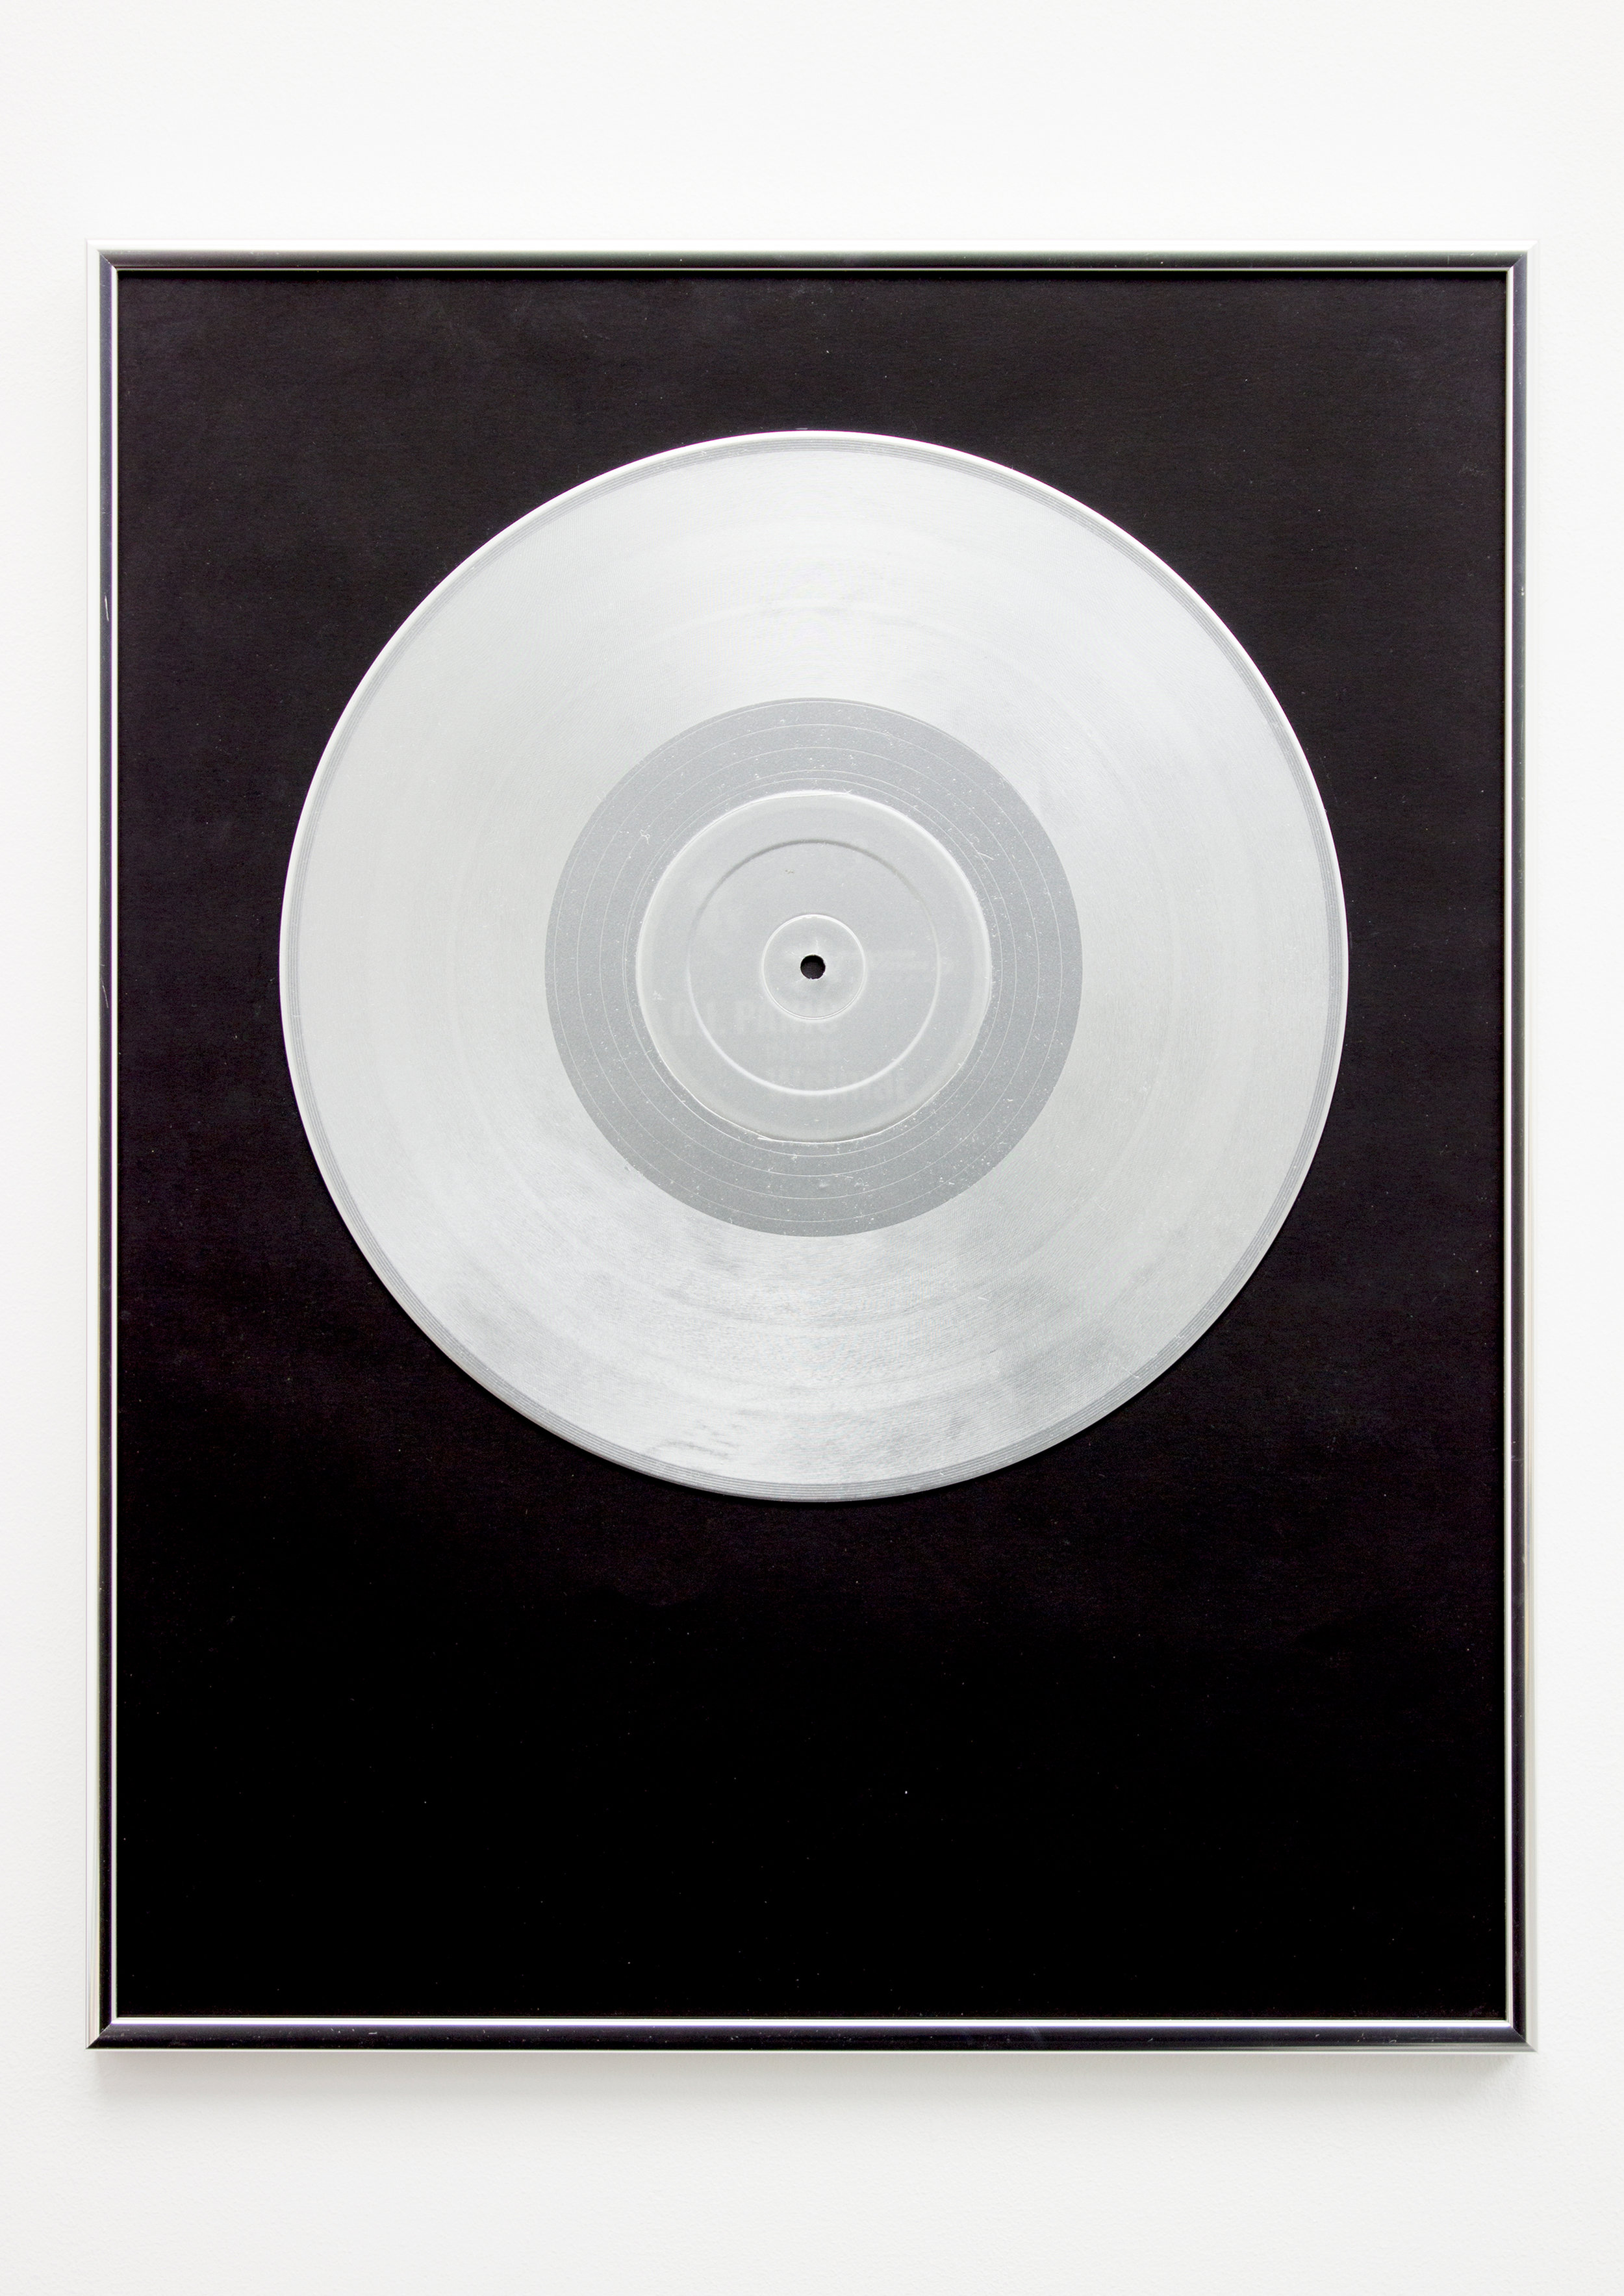  12"15. Vinyl record, spray paint, paper &amp; silver frame, 51cm x 41cm x 2cm, 2019. ©Neil Kilby 2019. 